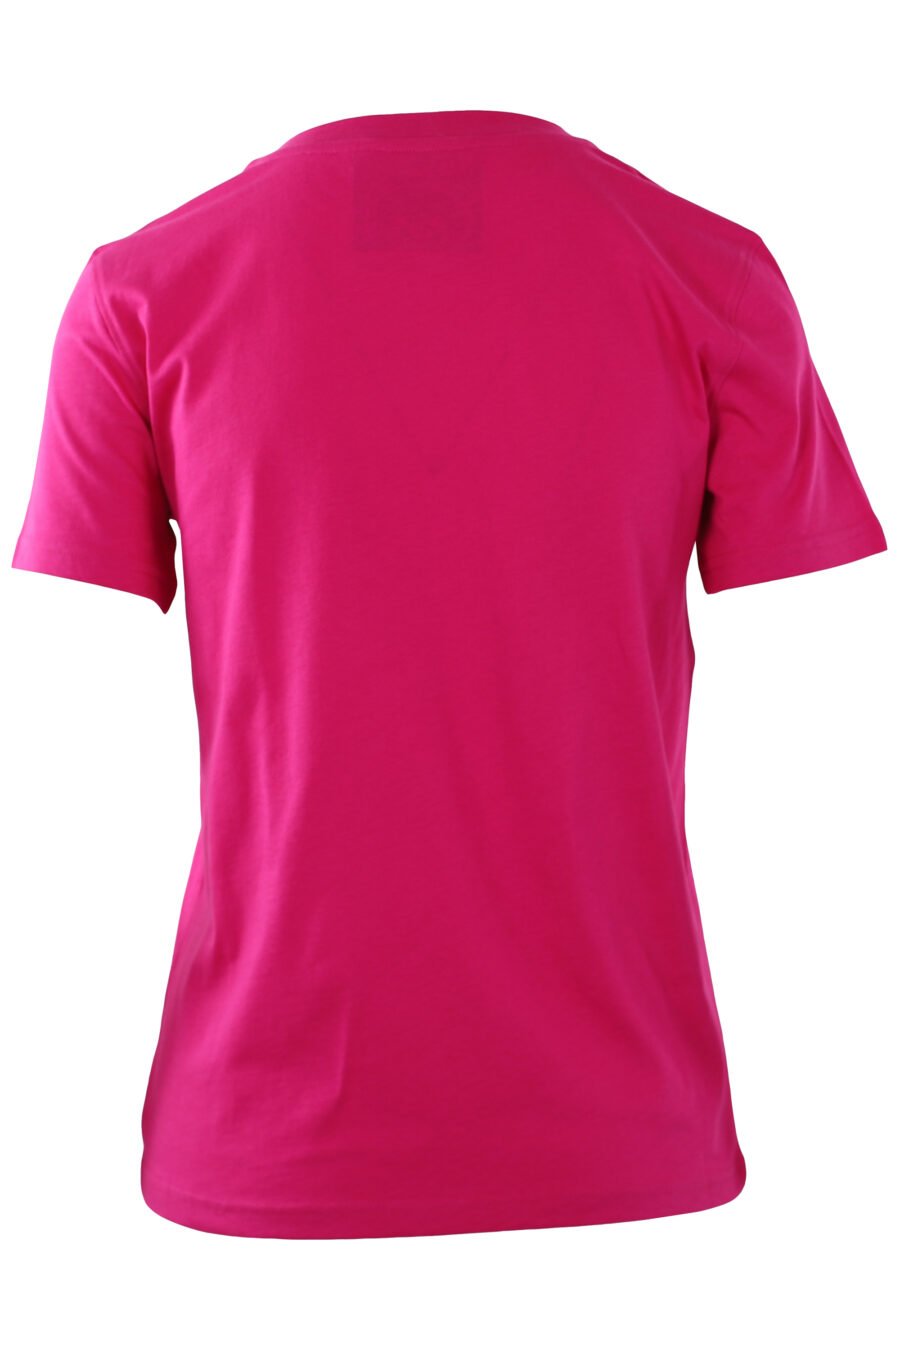 Fuchsia T-shirt with bear shield logo - IMG 0245